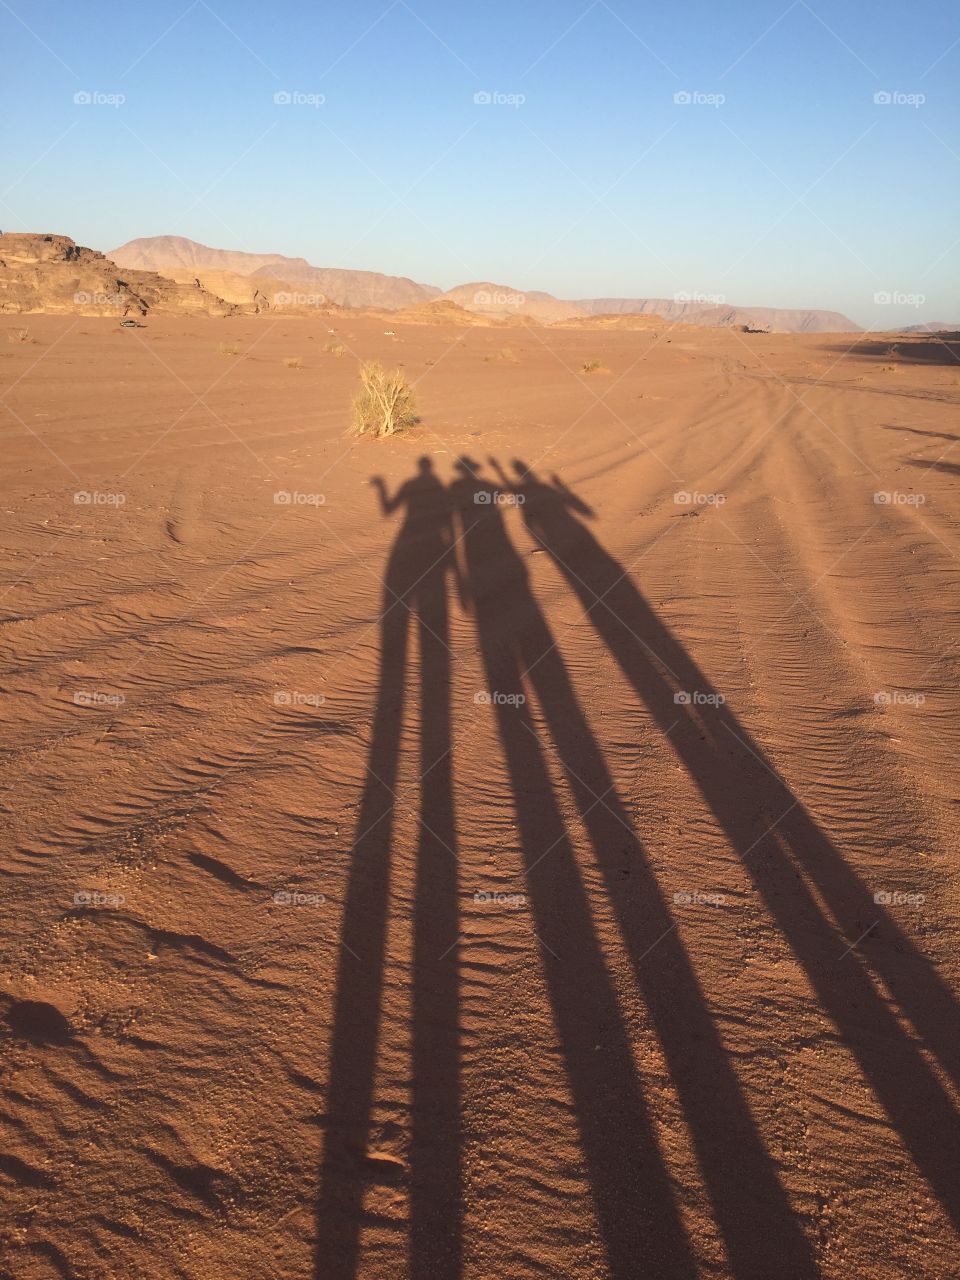 Long shadows at sunset in the desert. Wadi Rum, Jordan. 